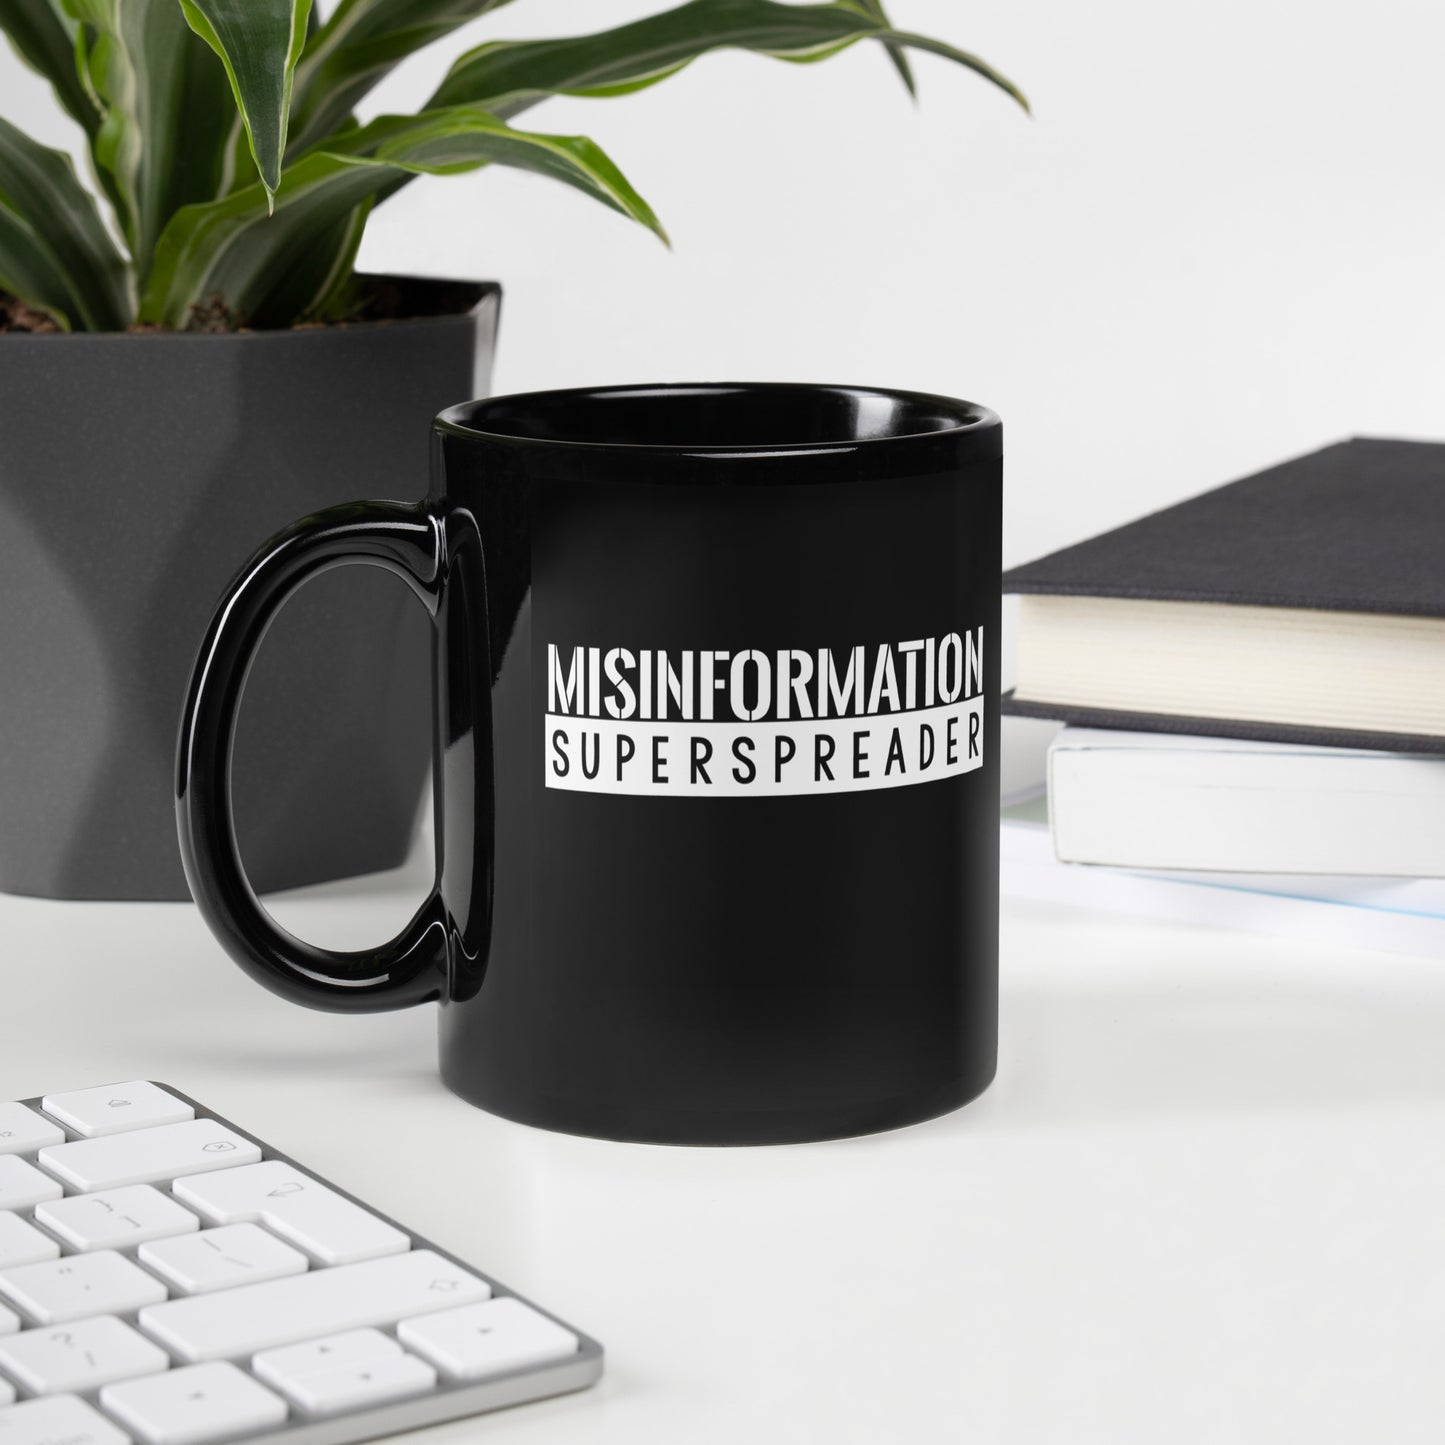 Misinformation Superspreader Mug